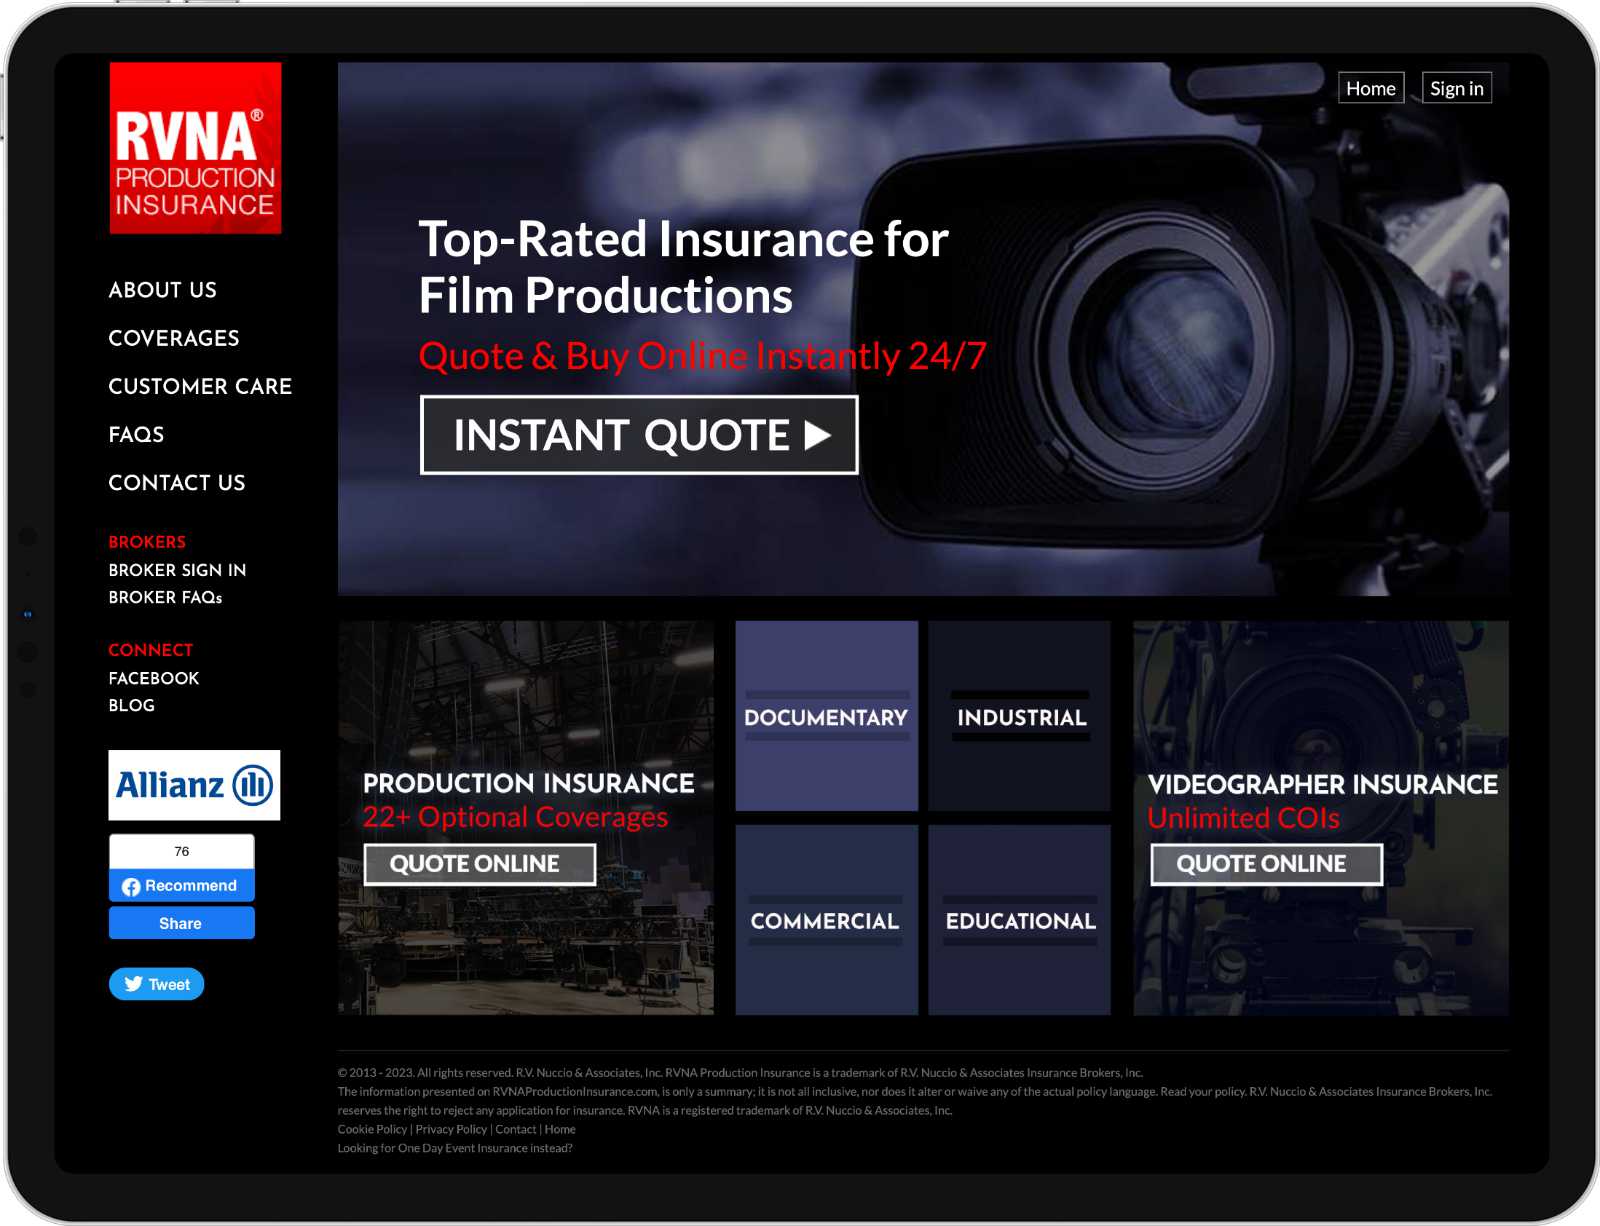 RVNA Film Production Insurance